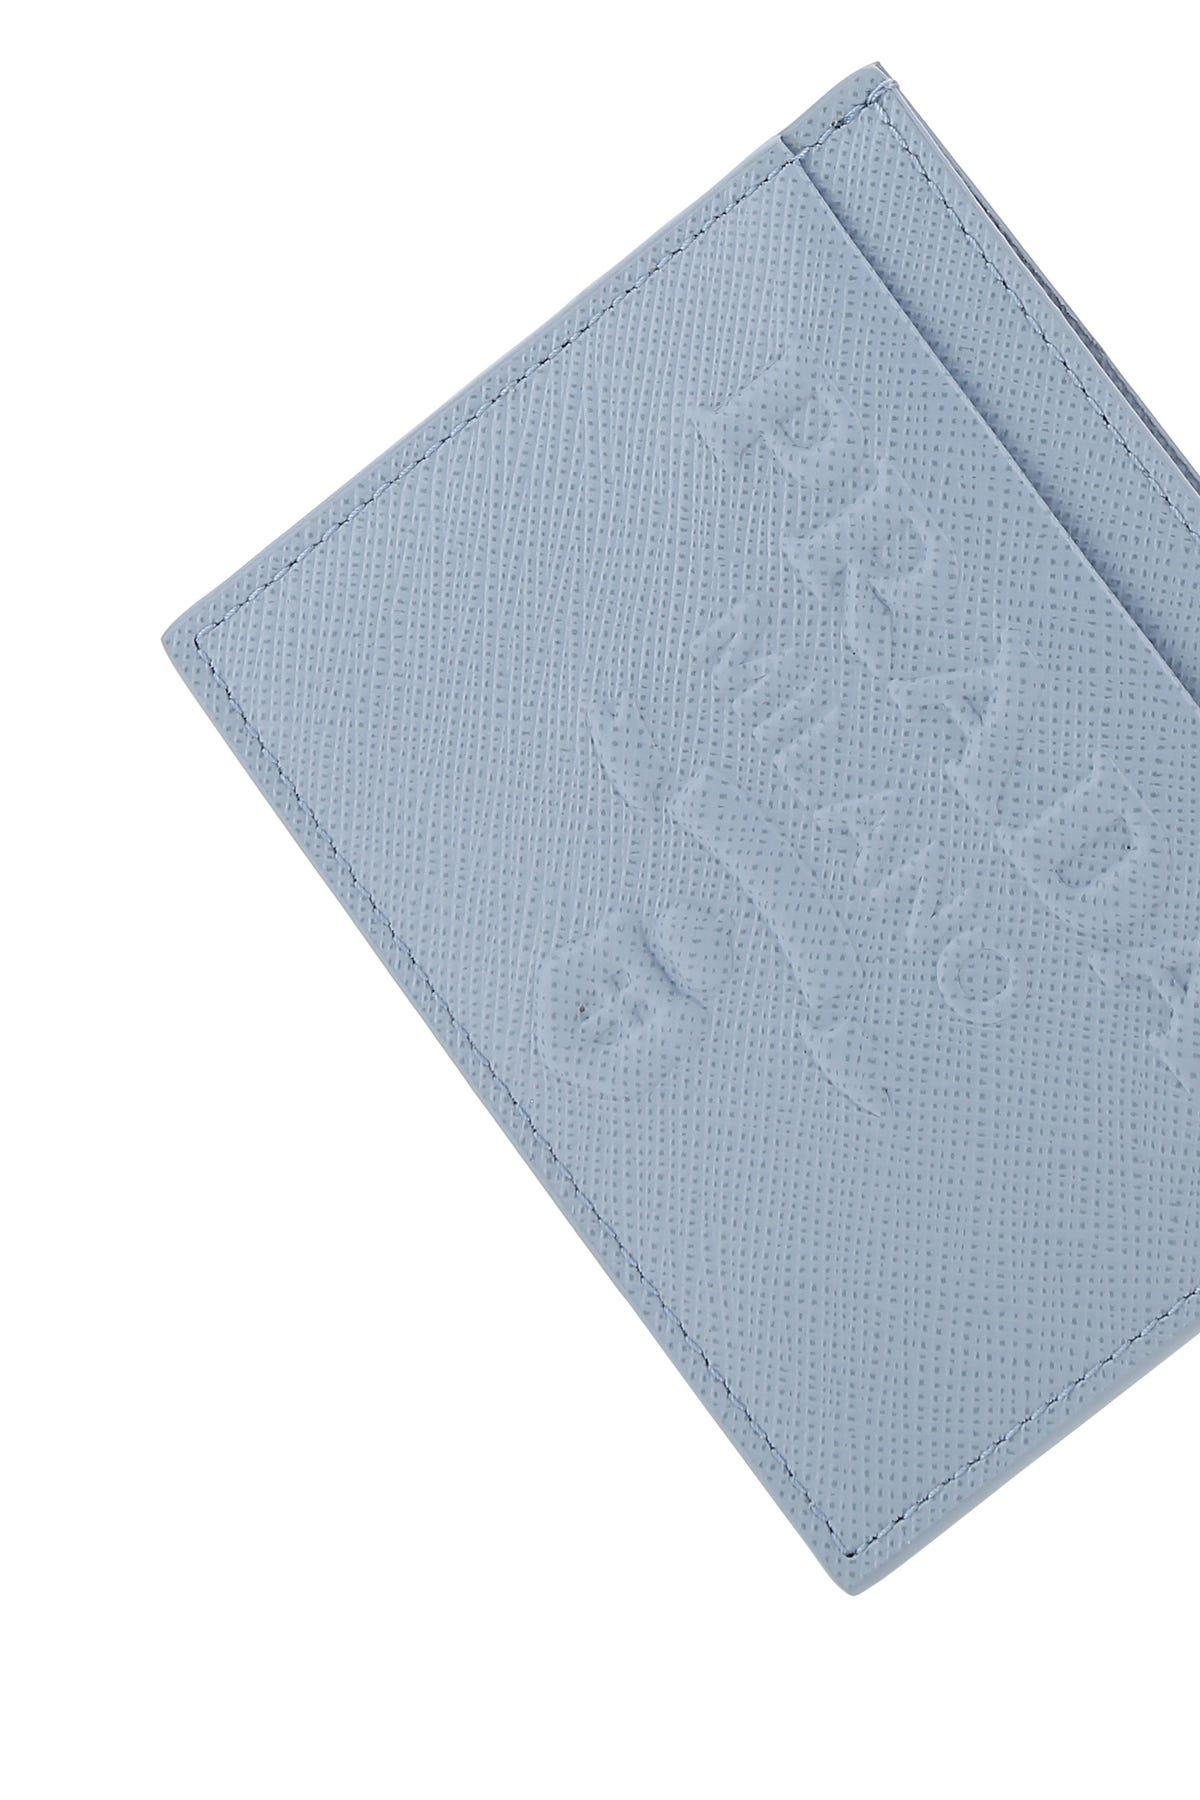 Prada Pastel Leather Card Holder in Light Blue (Blue) - Lyst